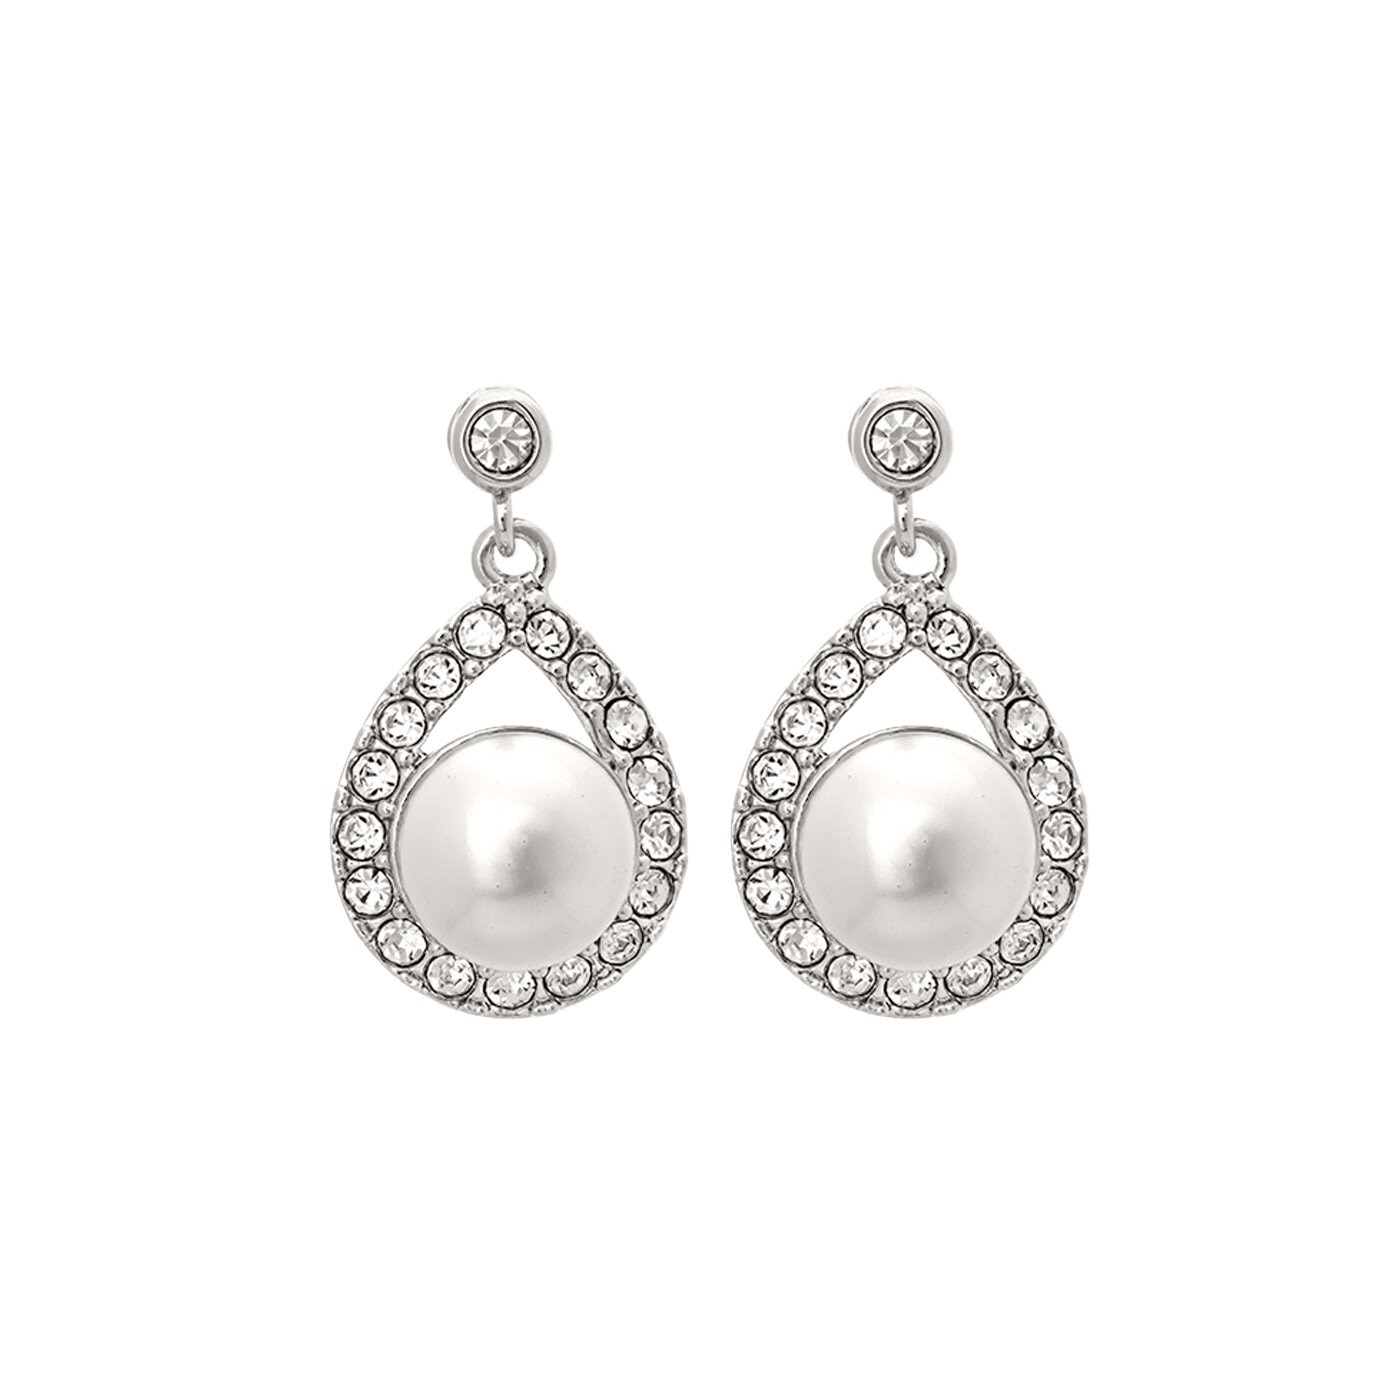 Emmylou earrings - Ivory (Silver)